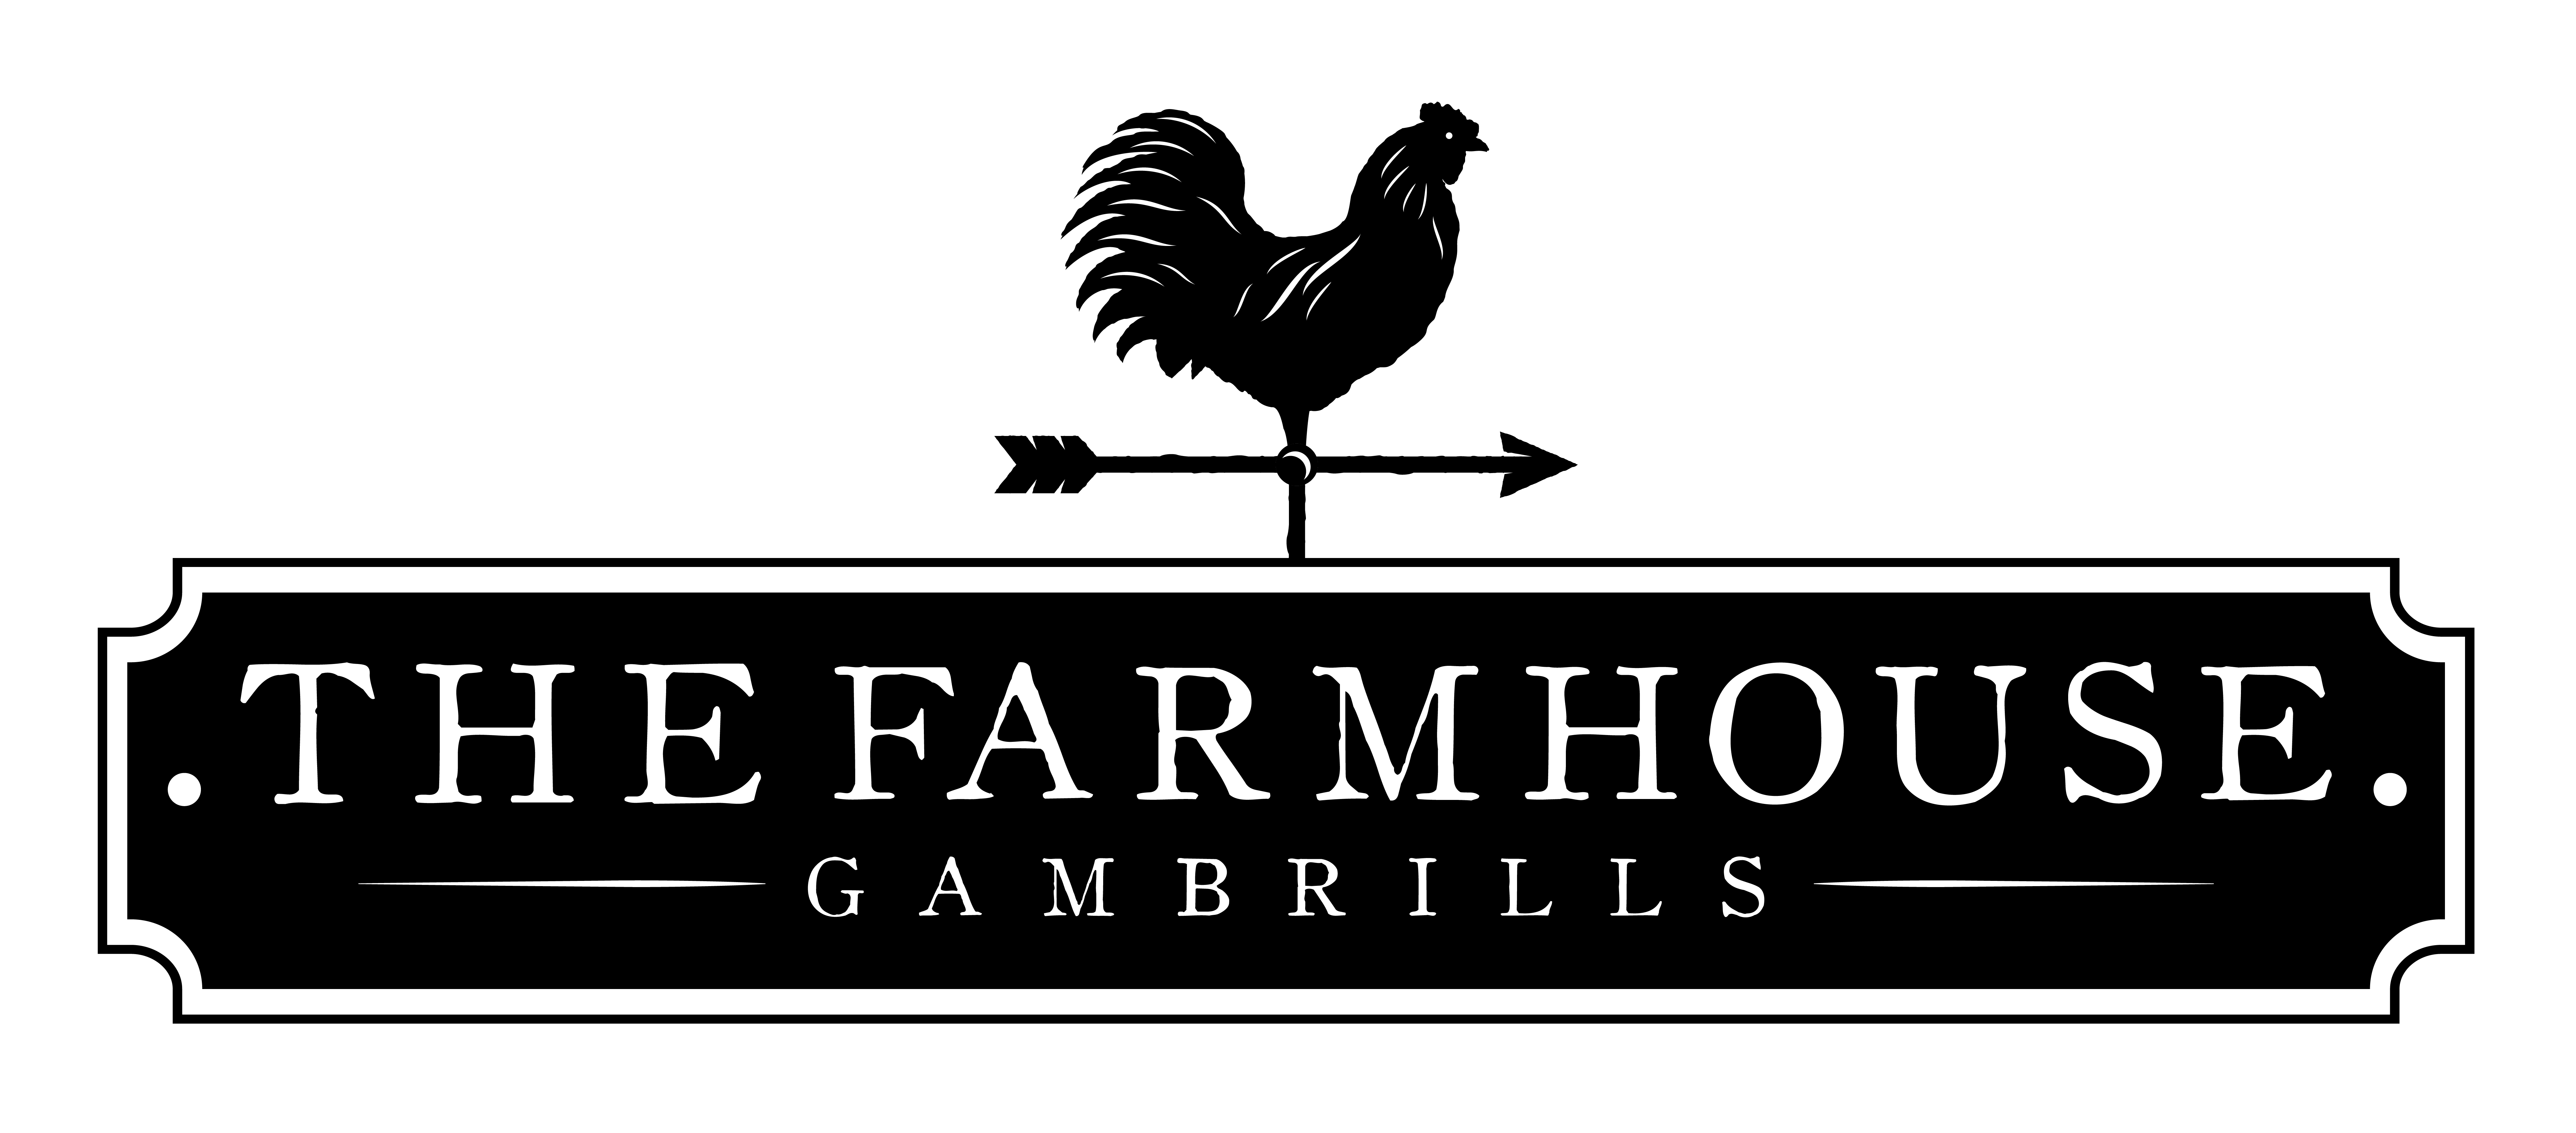 The Farmhouse Gambrills